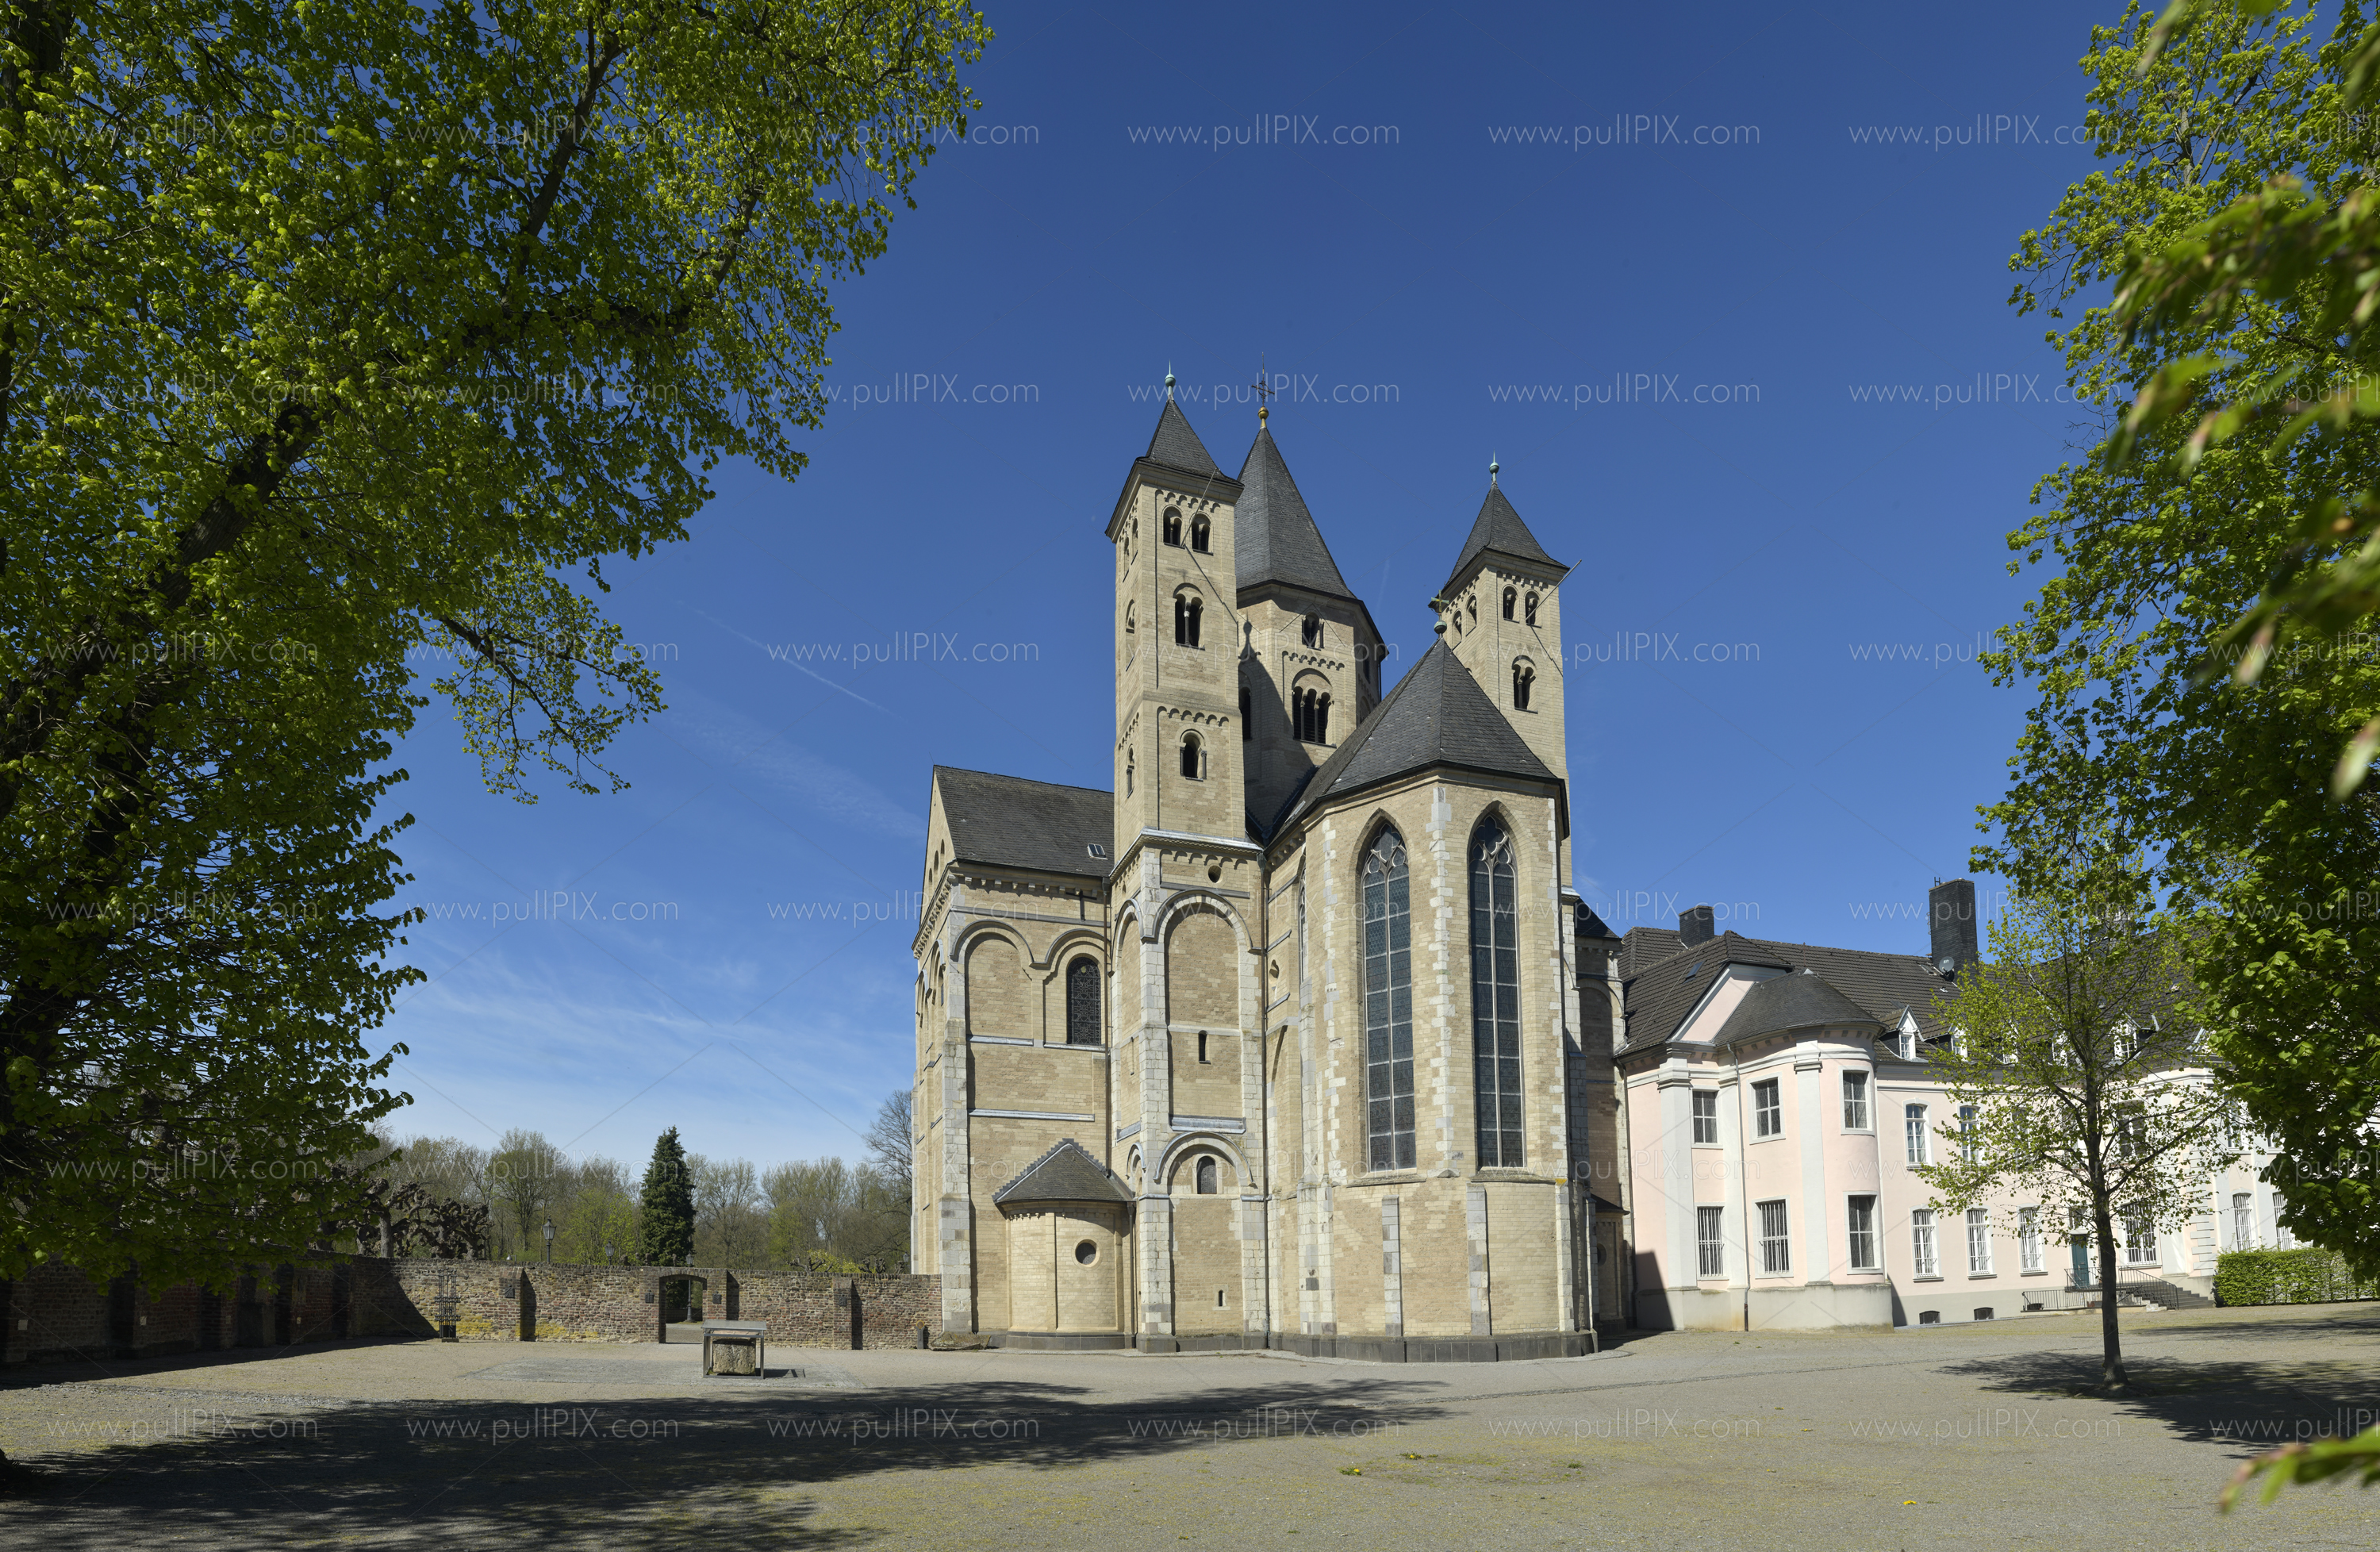 Preview kloster knechtsteden 2.jpg